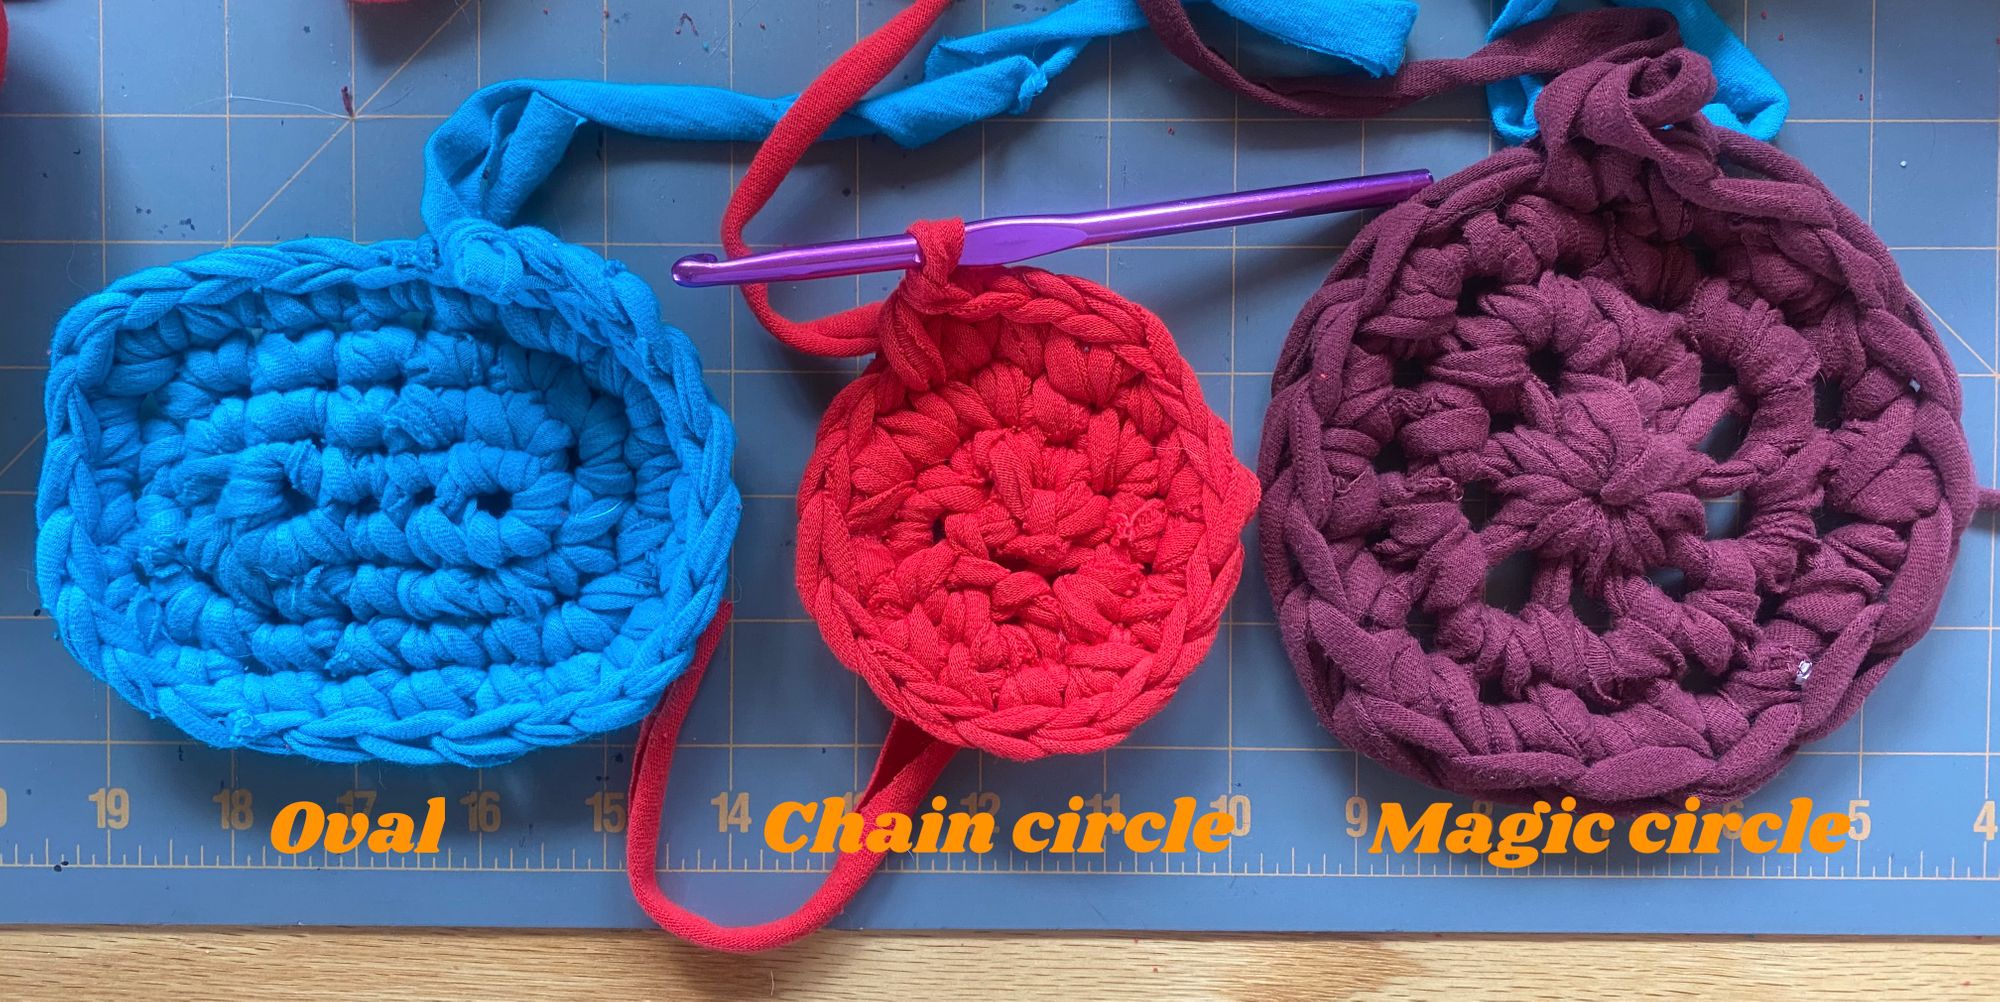 Crochet tote bags 3 ways!